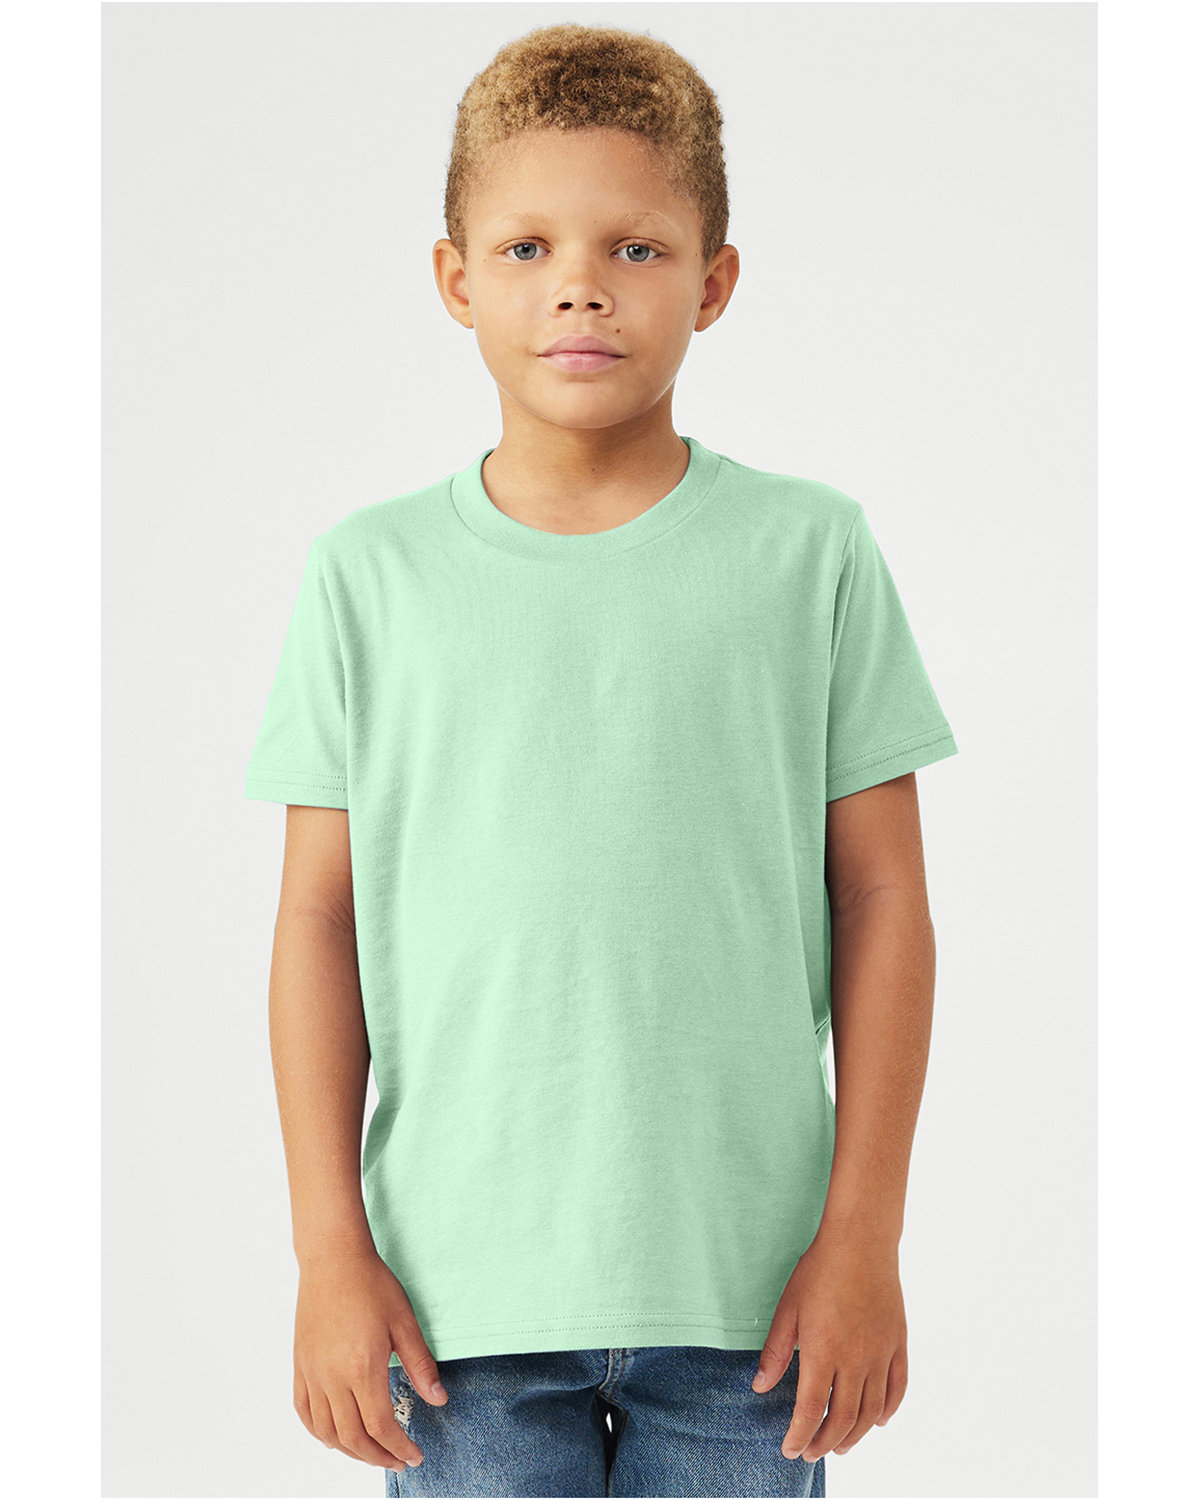 Bella + Canvas Youth Jersey T-Shirt MINT 